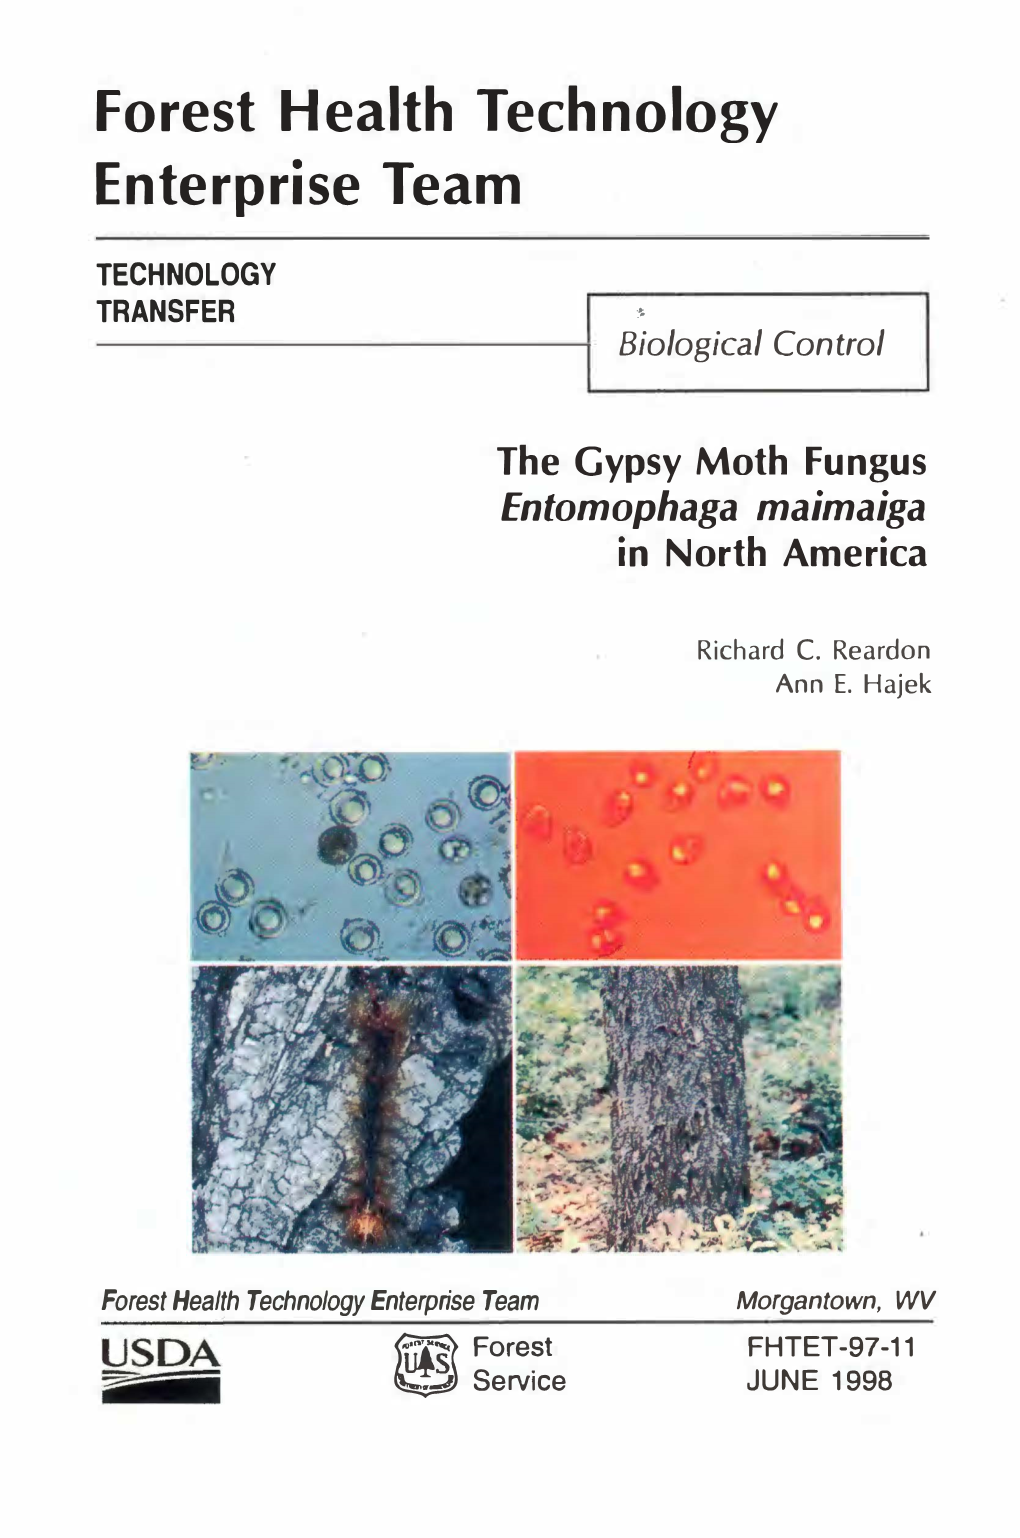 The Gypsy Moth Fungus Entomophaga Maimaiga in North America